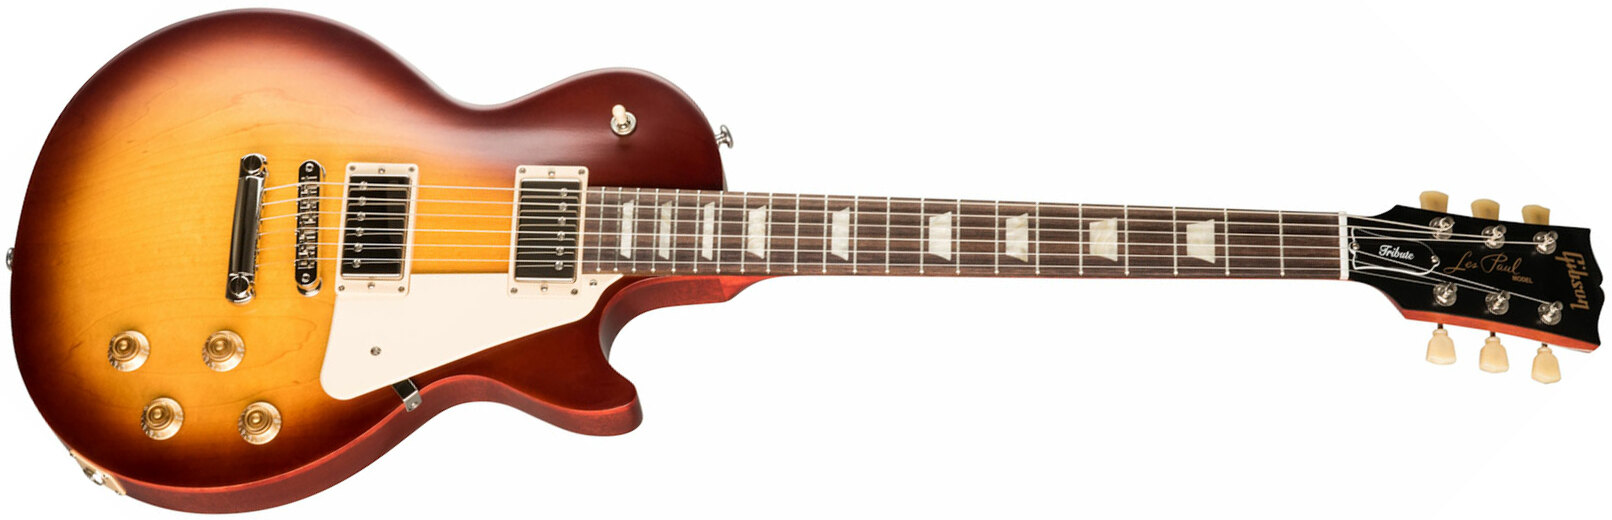 Gibson Les Paul Tribute Modern 2h Ht Rw - Satin Iced Tea - Enkel gesneden elektrische gitaar - Main picture